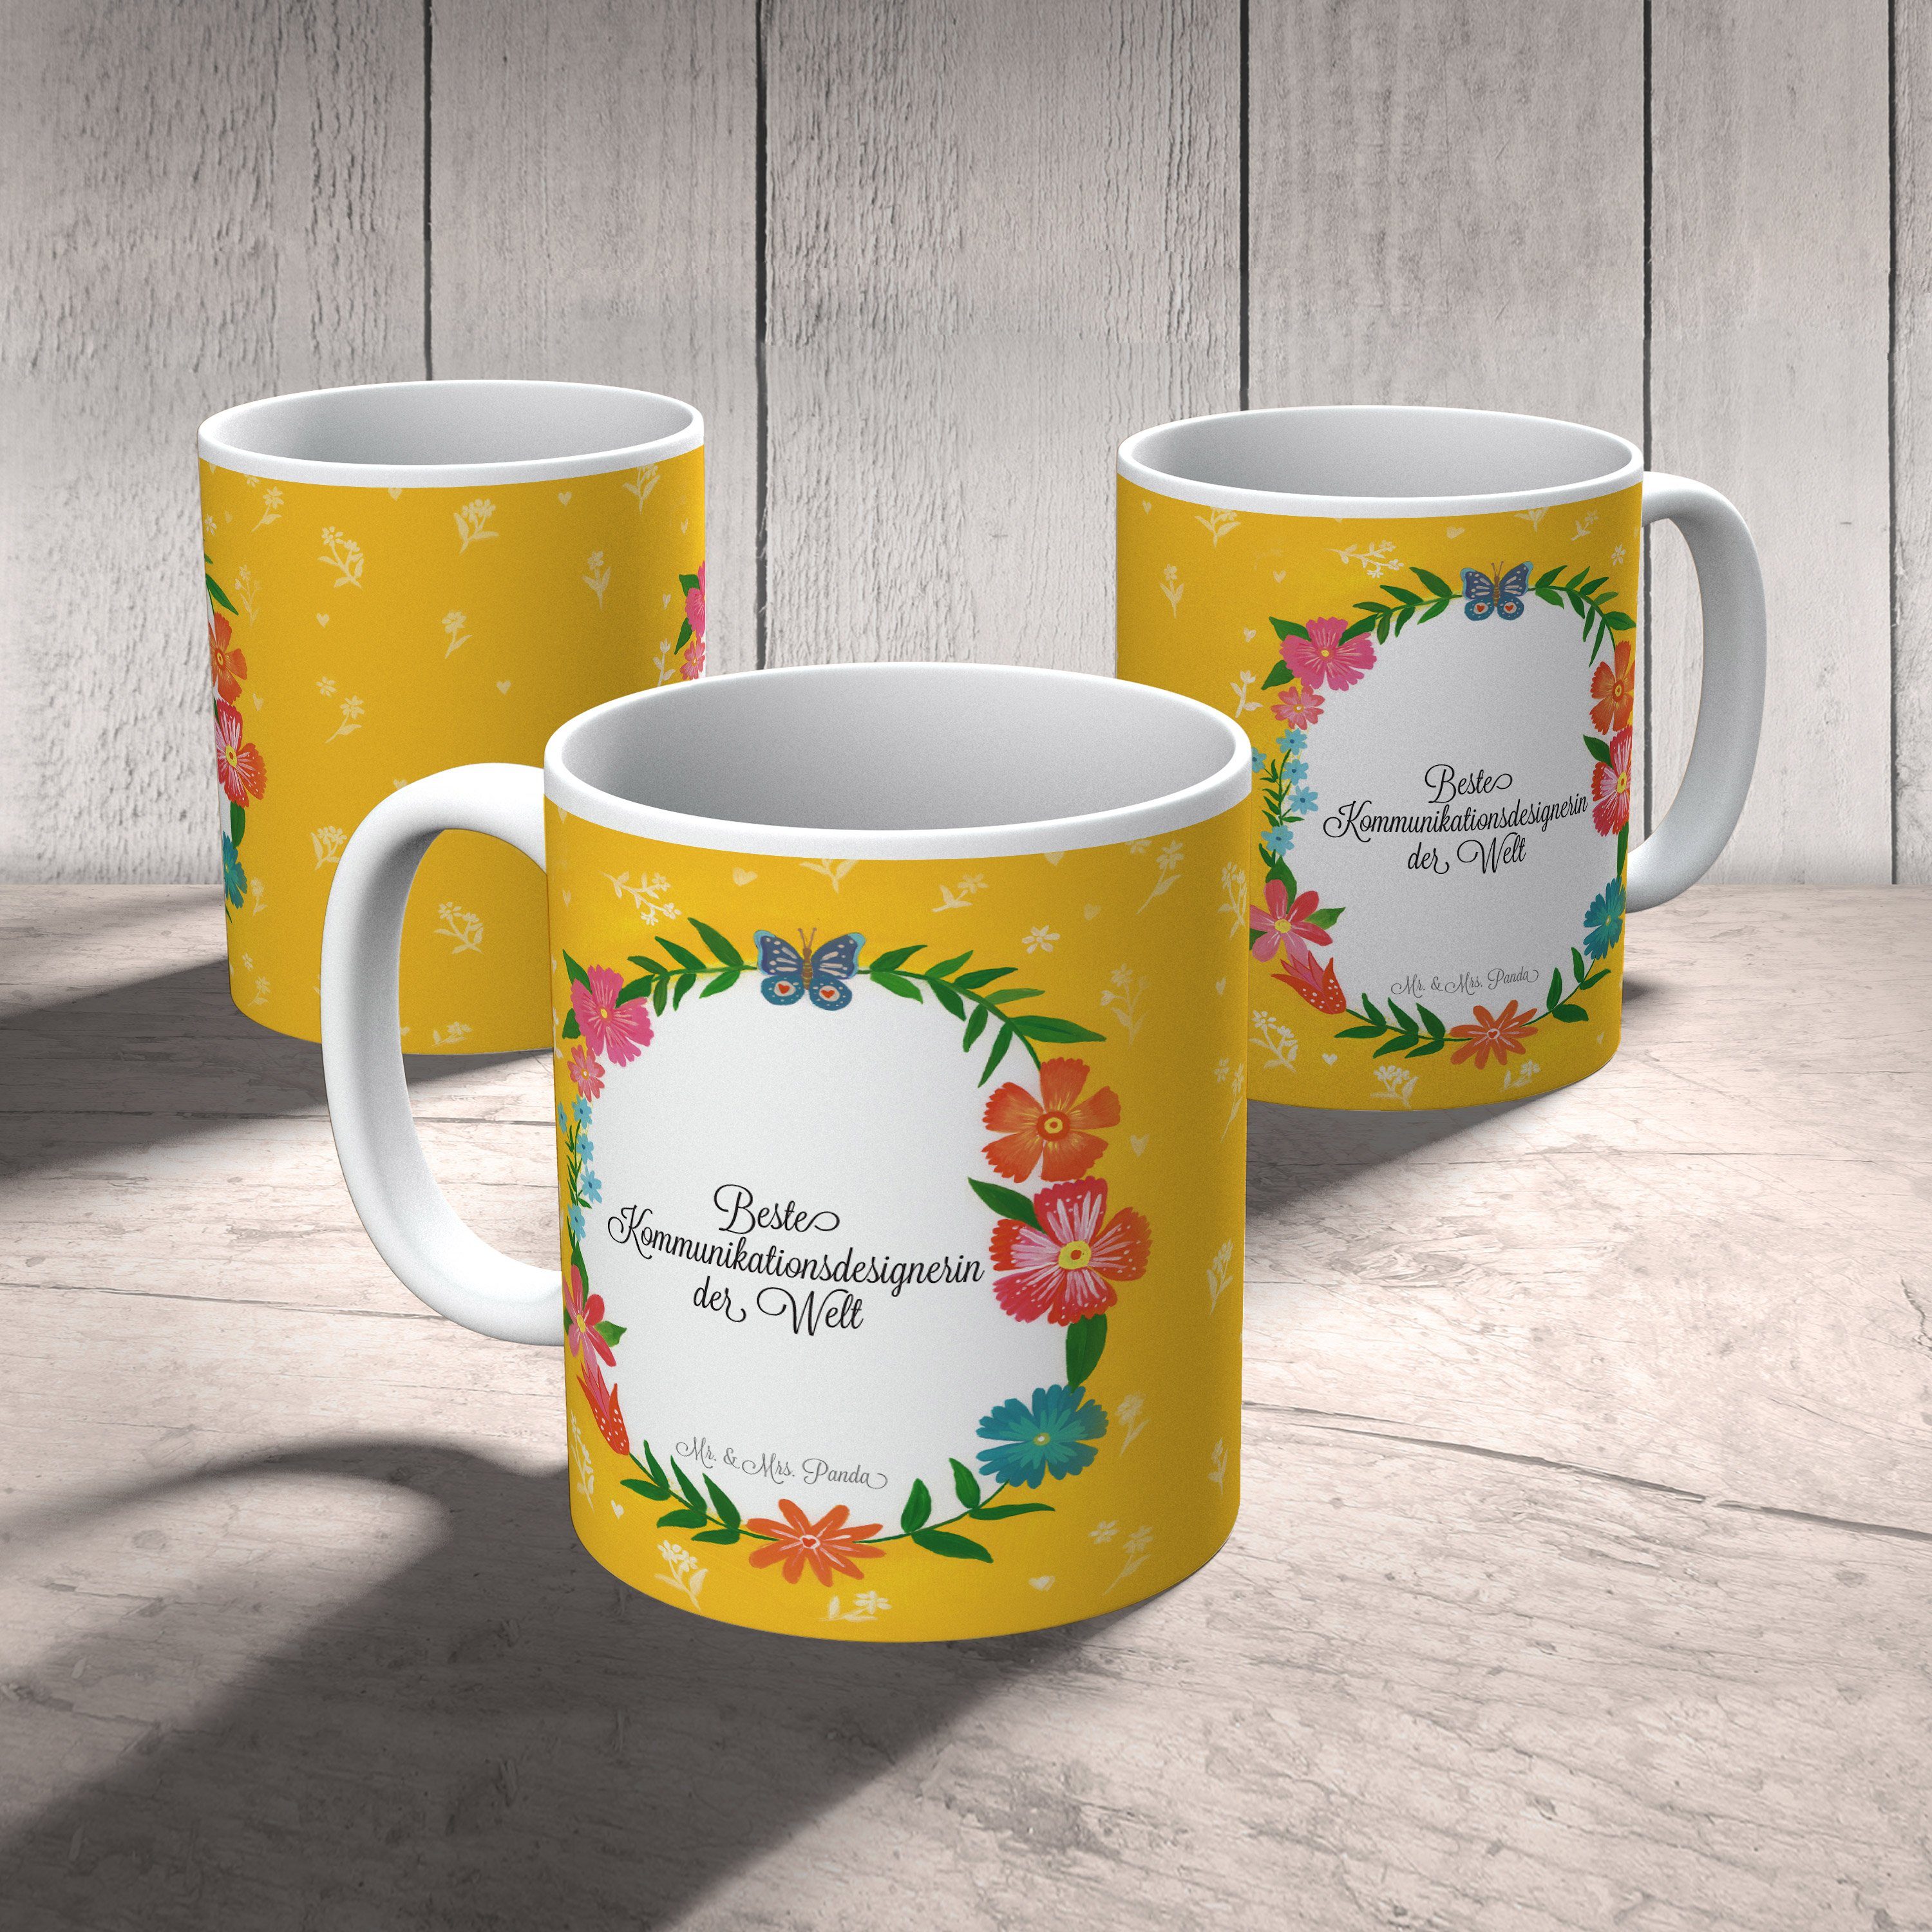 Mr. & Mrs. Panda Tasse Kaffeetasse, Teetasse, Kommunikationsdesignerin Geschenk, Keramik - Abschluss